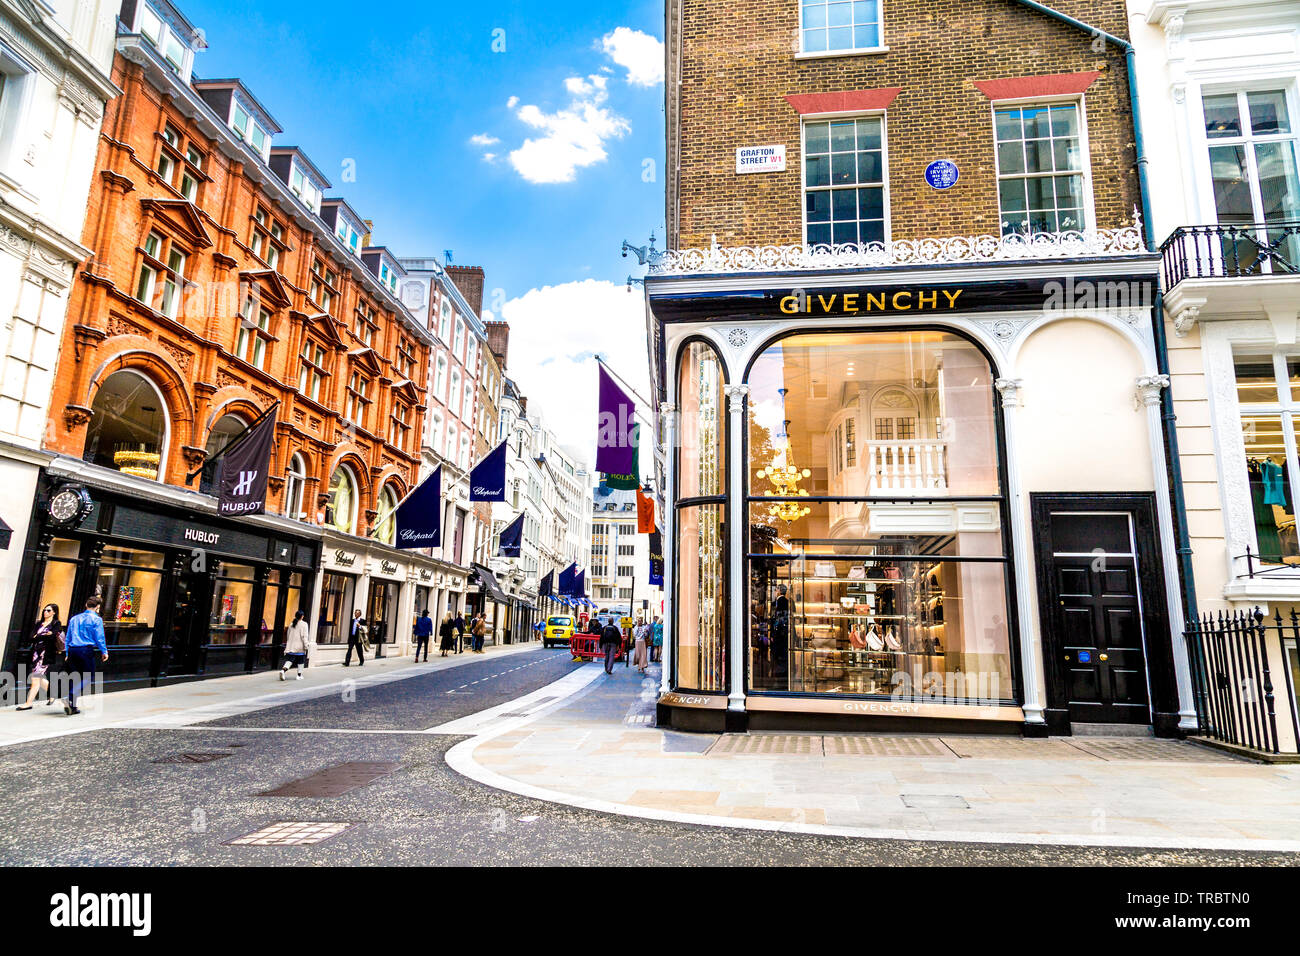 Mayfair Givenchy almacenar y New Bond Street en Londres, Reino Unido Foto de stock